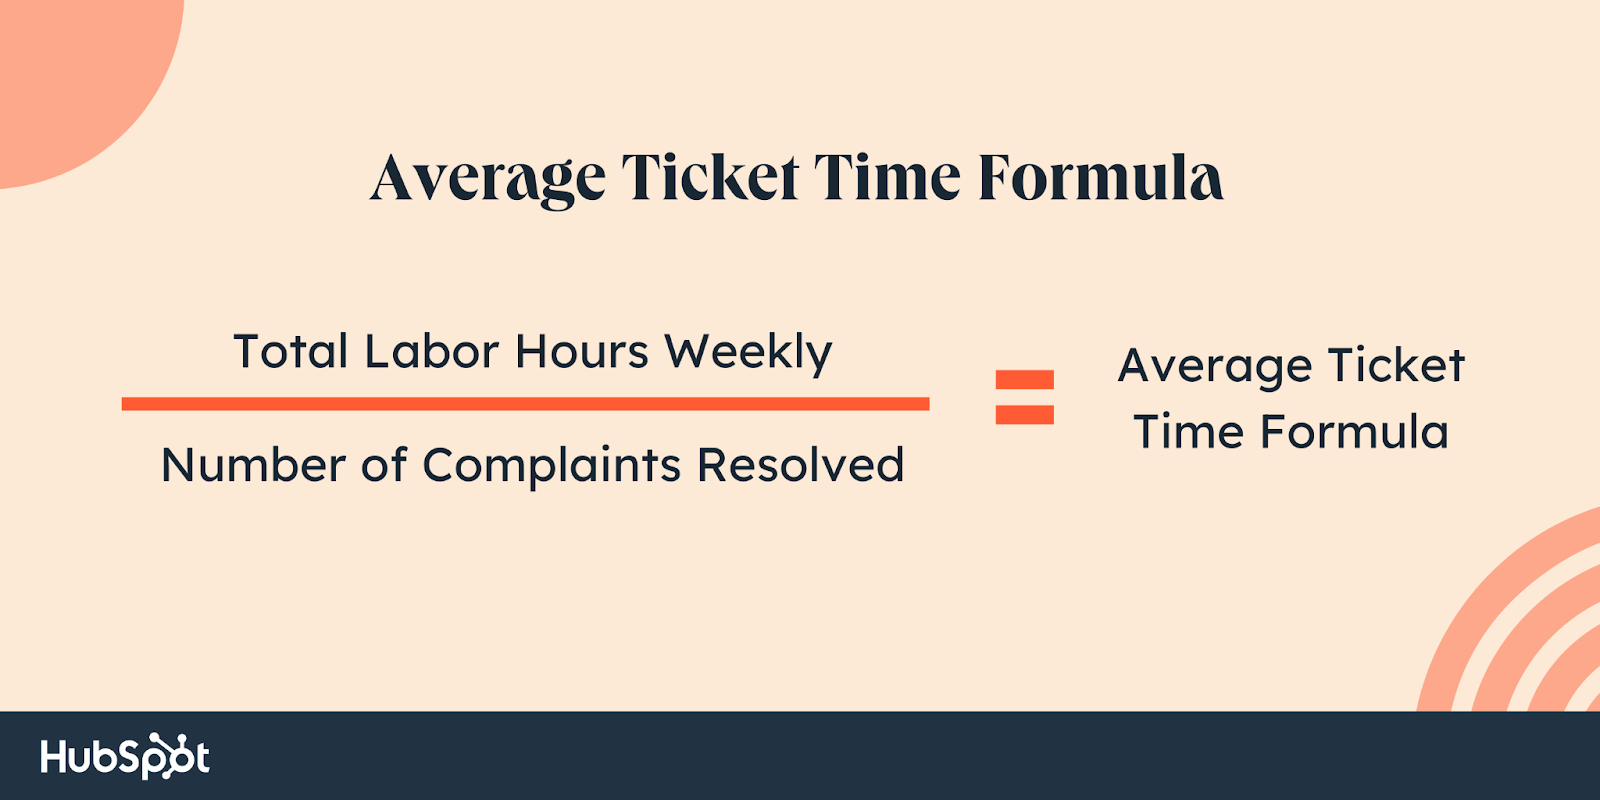 customer satisfaction metics, average ticket time formula